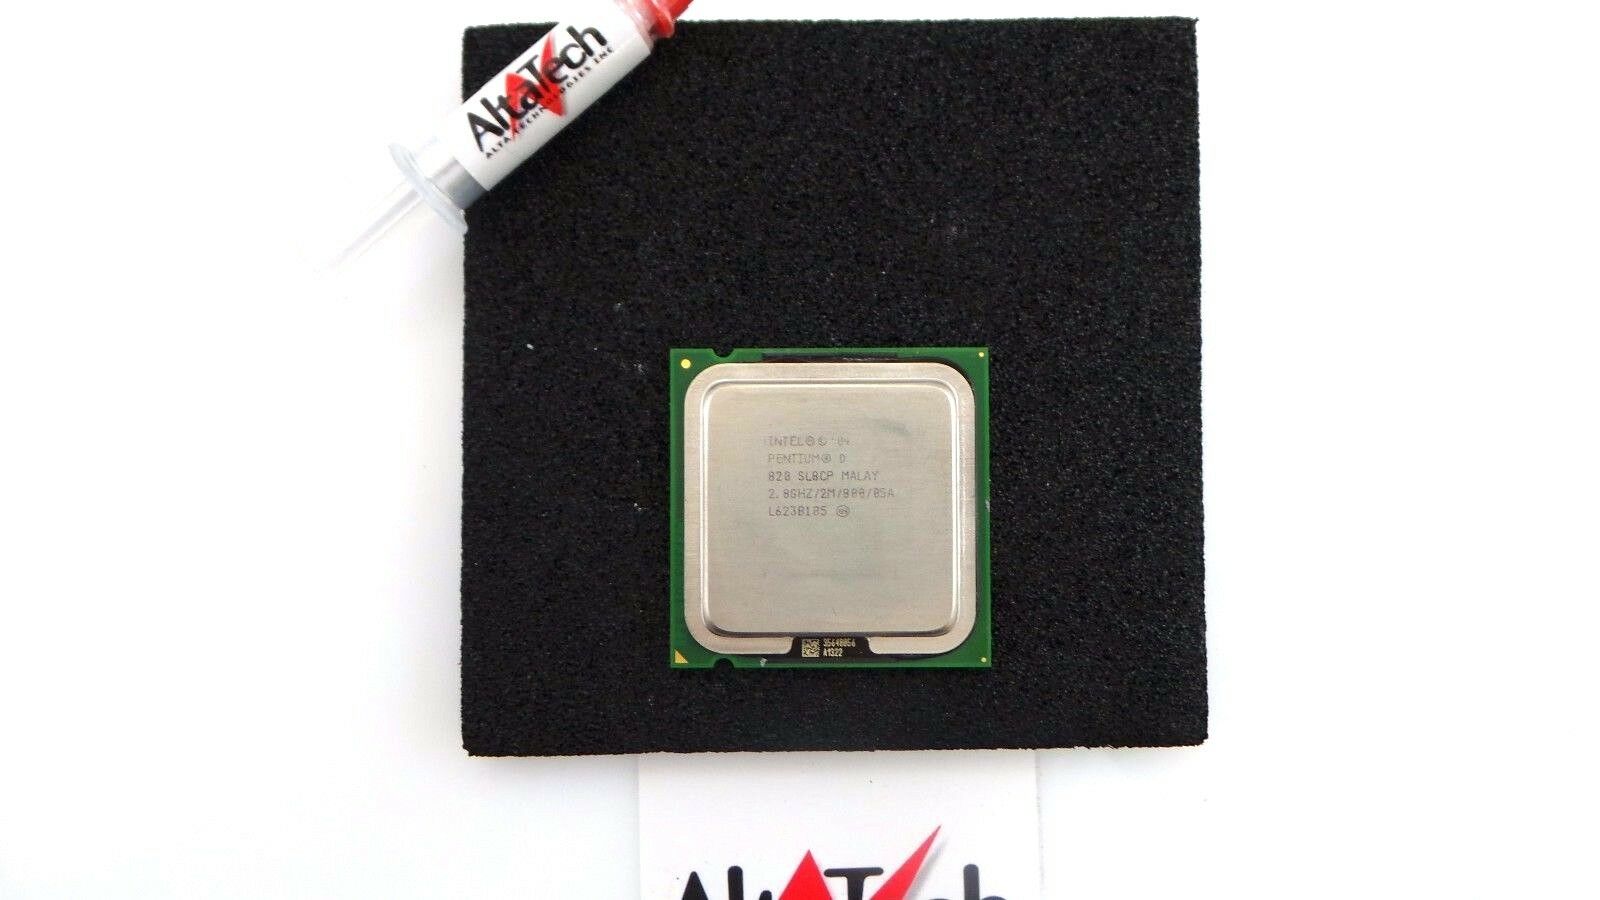 Intel SL8CP ntel SL8CP 2.80GHz 2MB 800MHz PD 820 SKT775 Pentium D Processor, Used